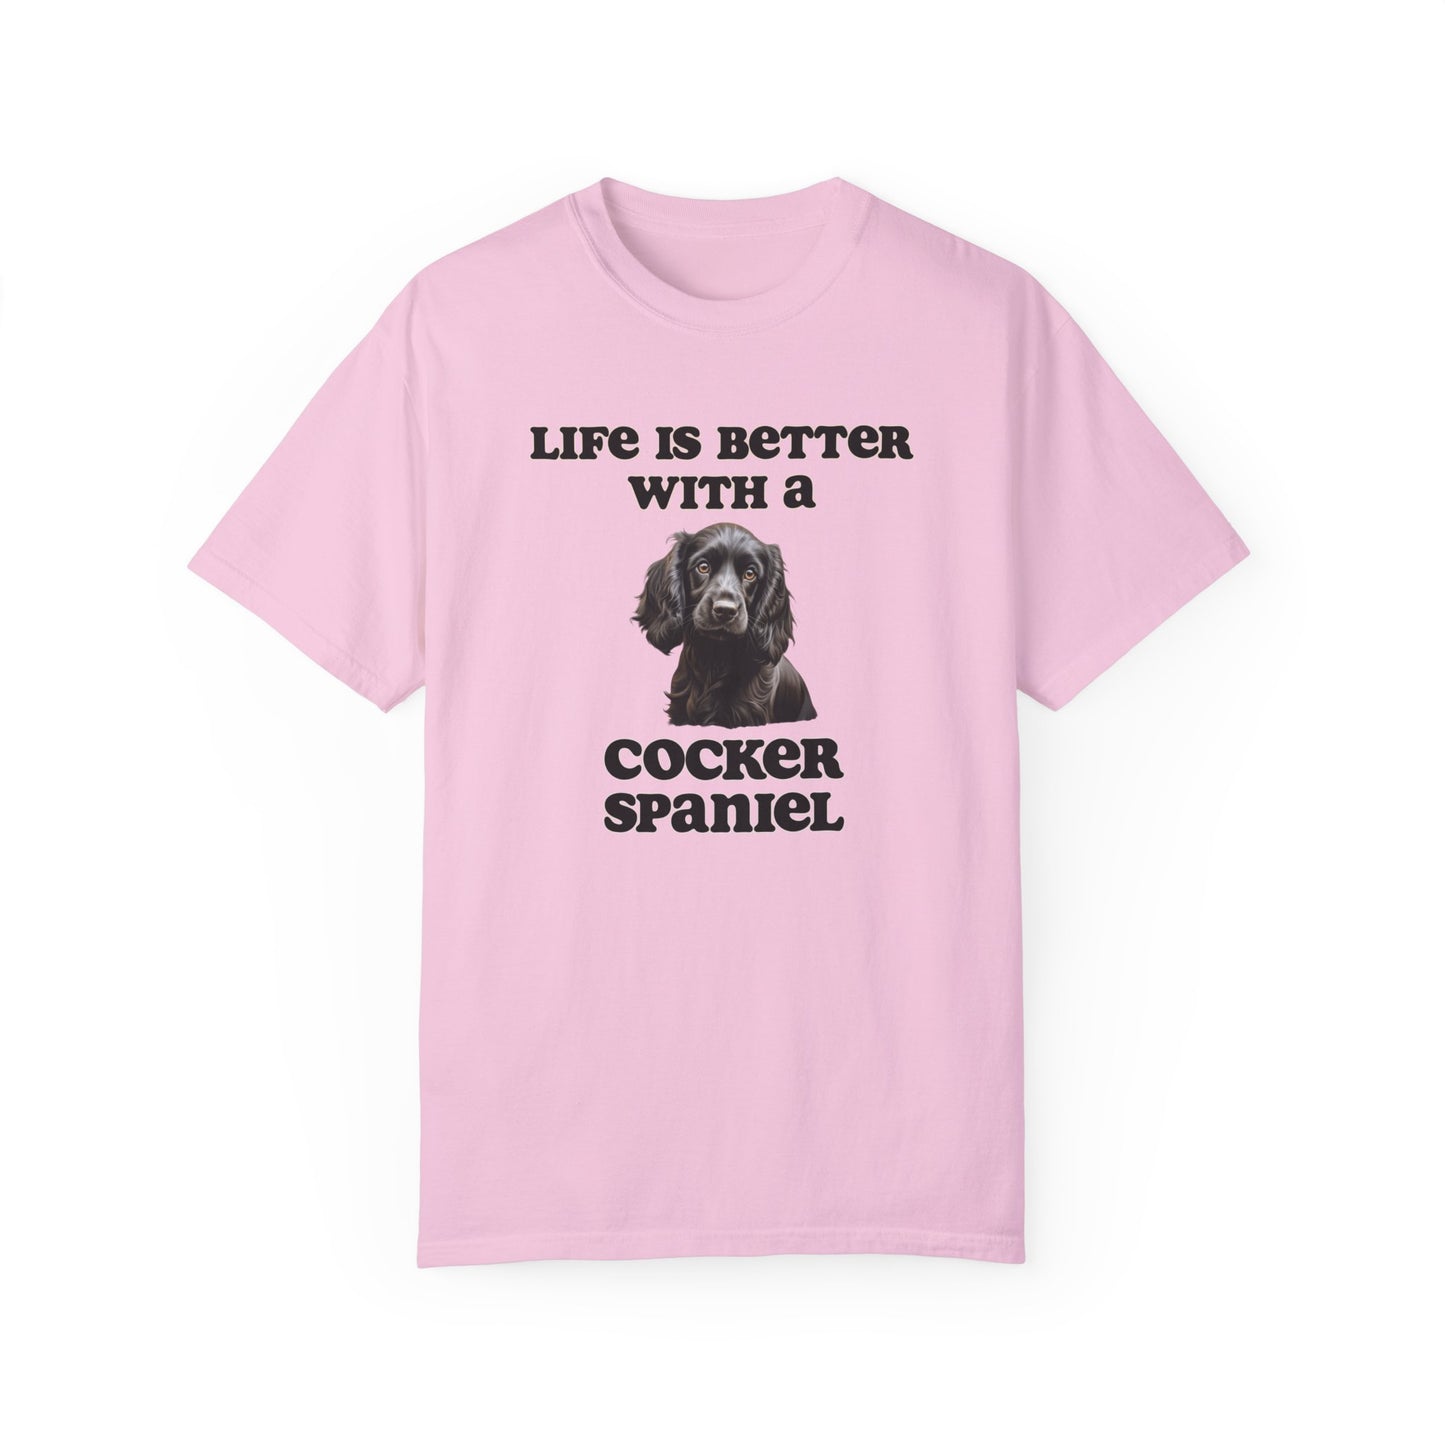 Black Cocker Spaniel Tshirt - Dog Mom Shirt, Dog Dad Shirt, gift for Dog Mom